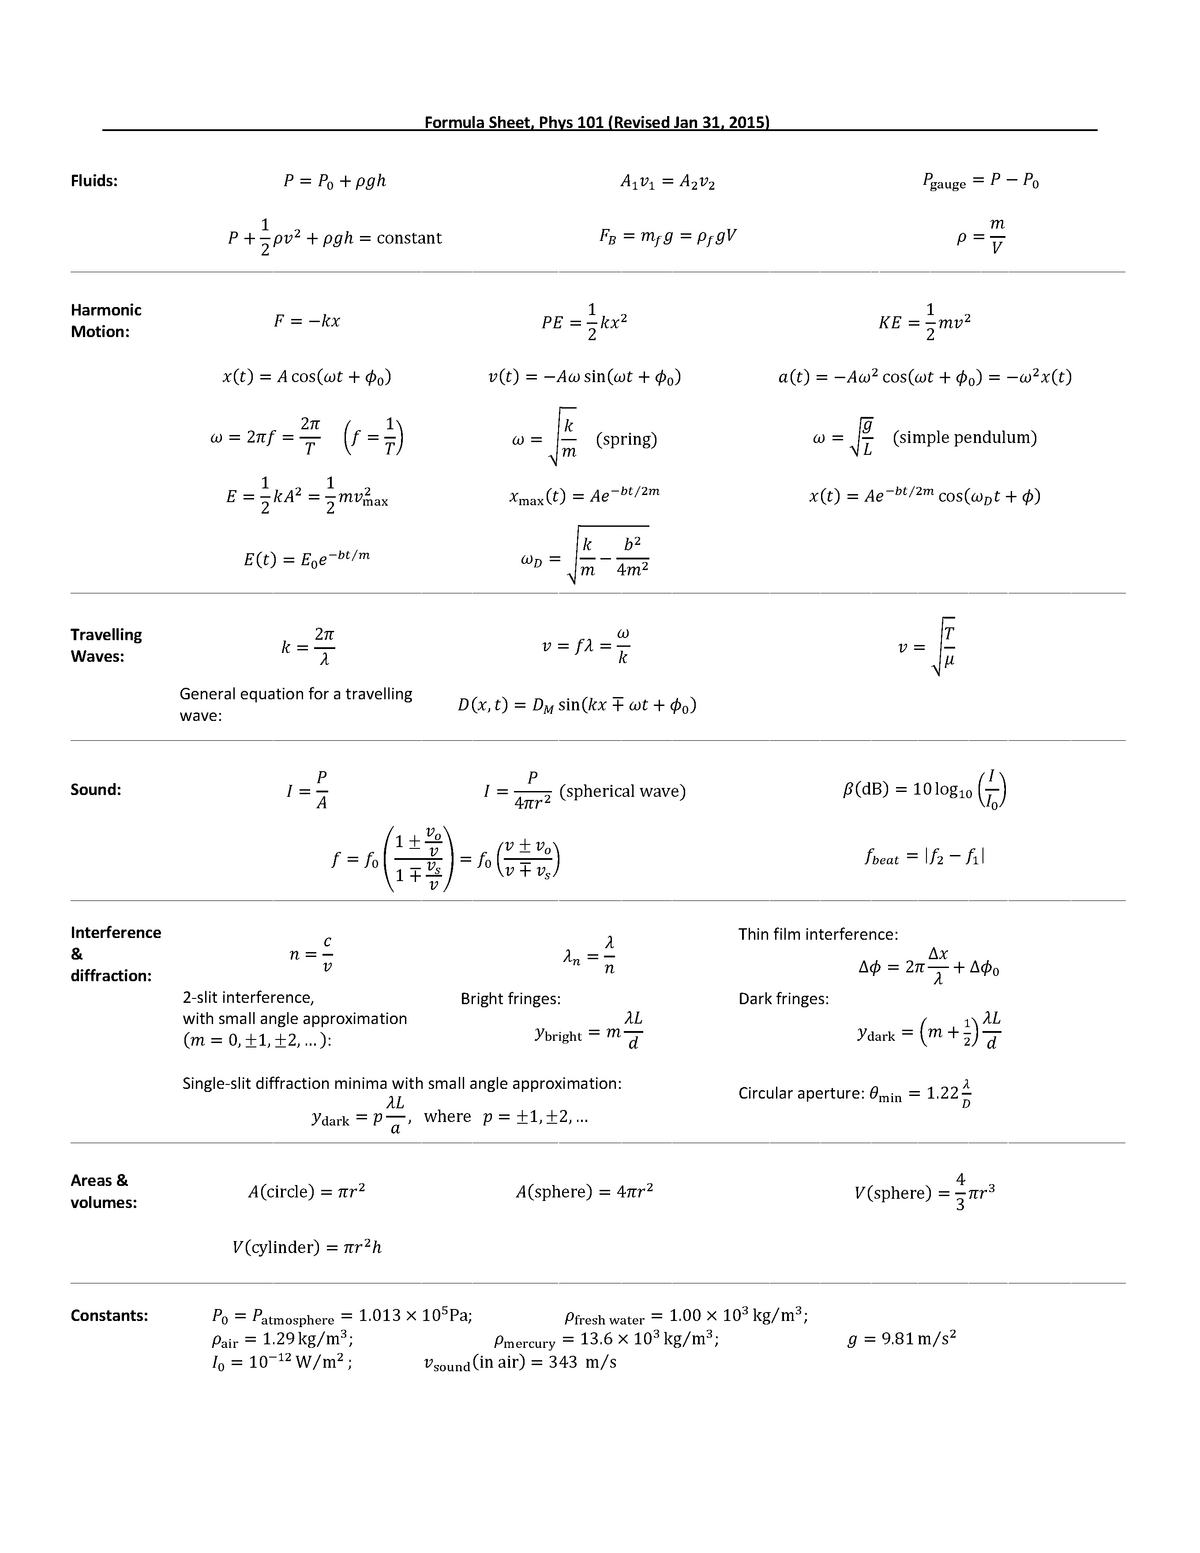 sfu physics 101 formula sheet